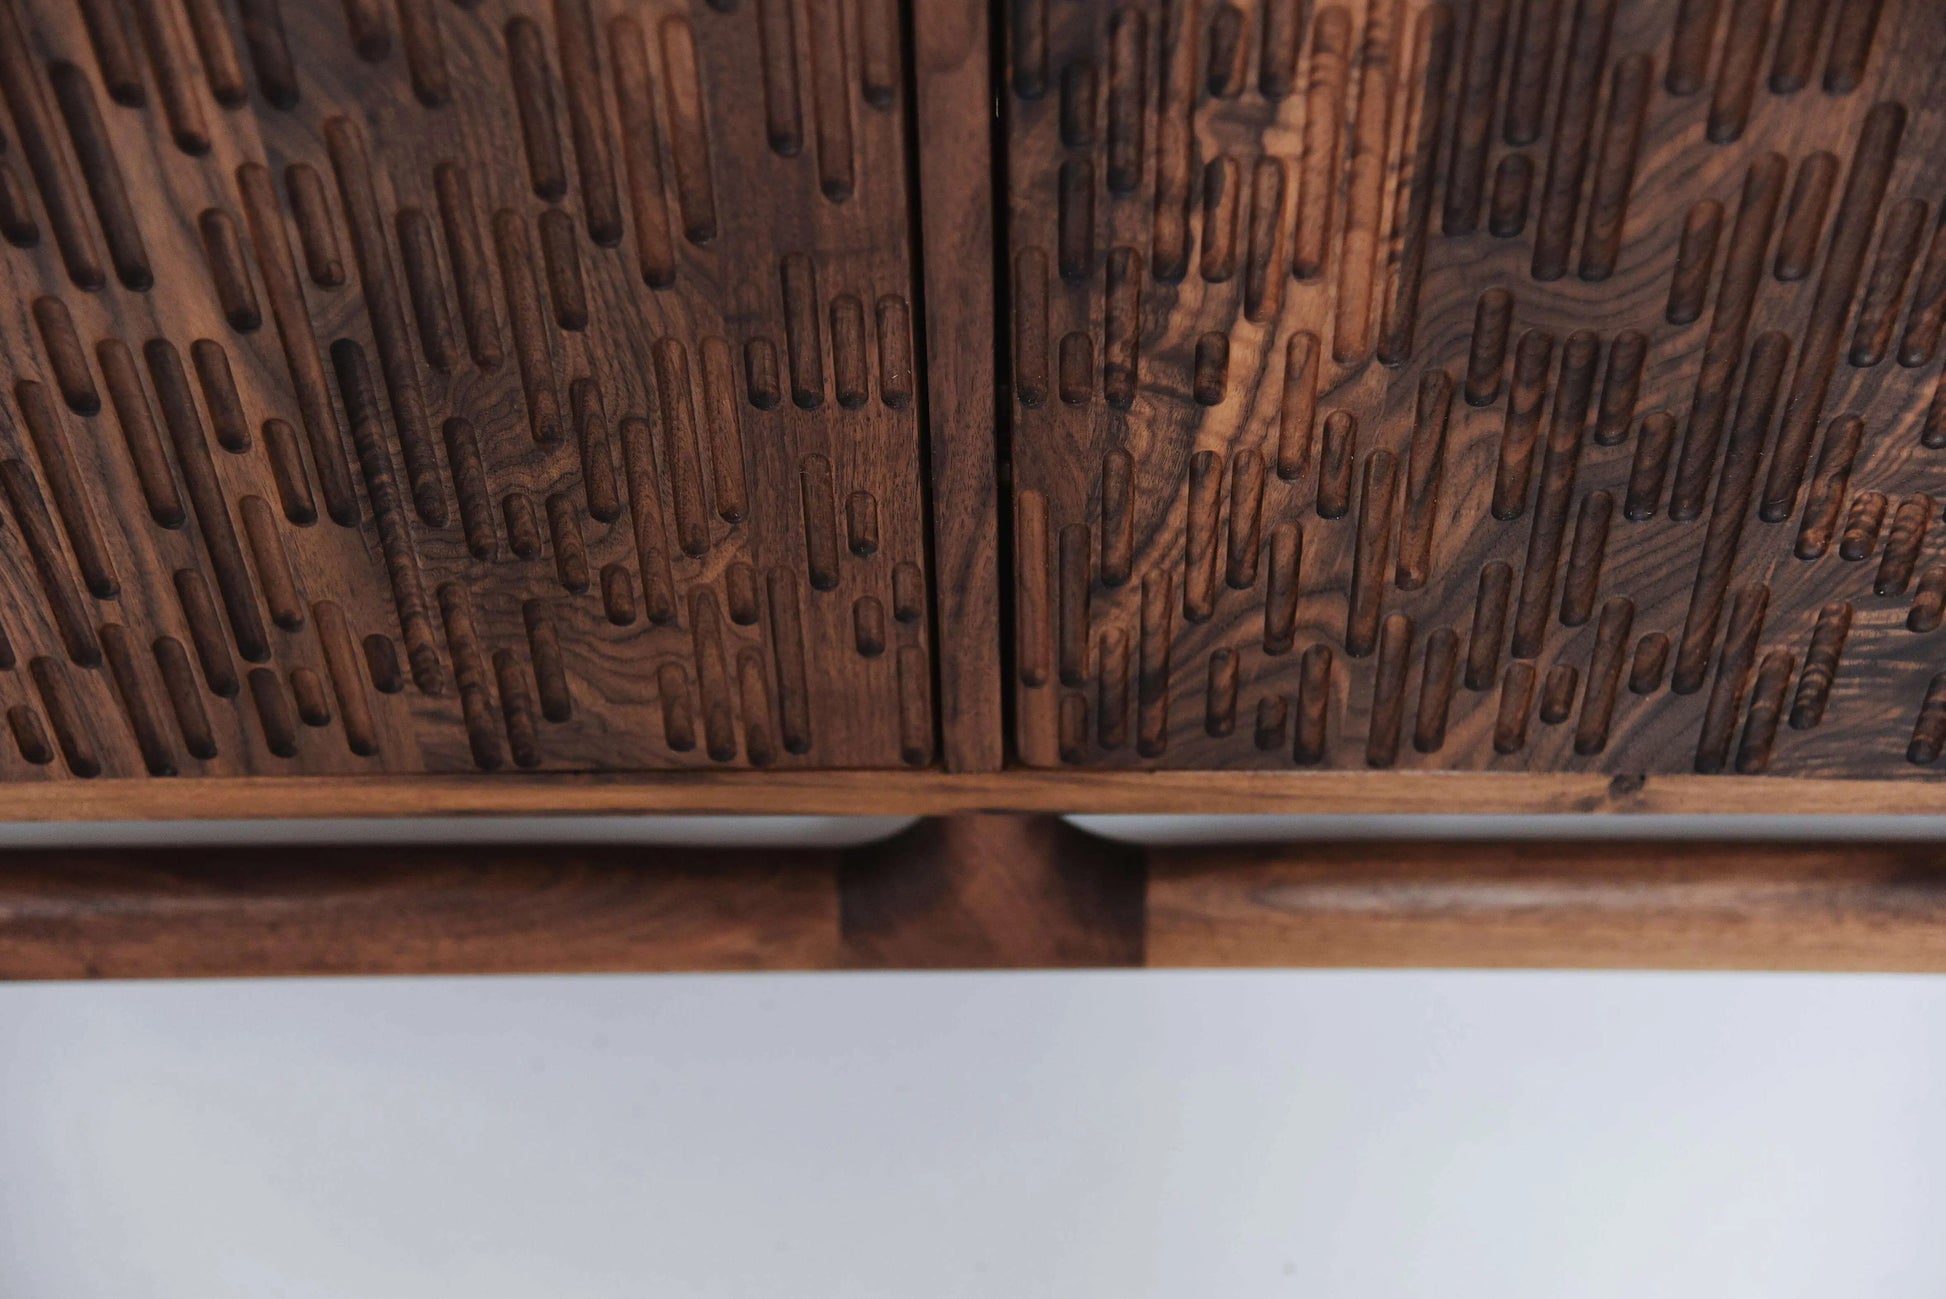 Detail of cnc textured credenza doors in walnut